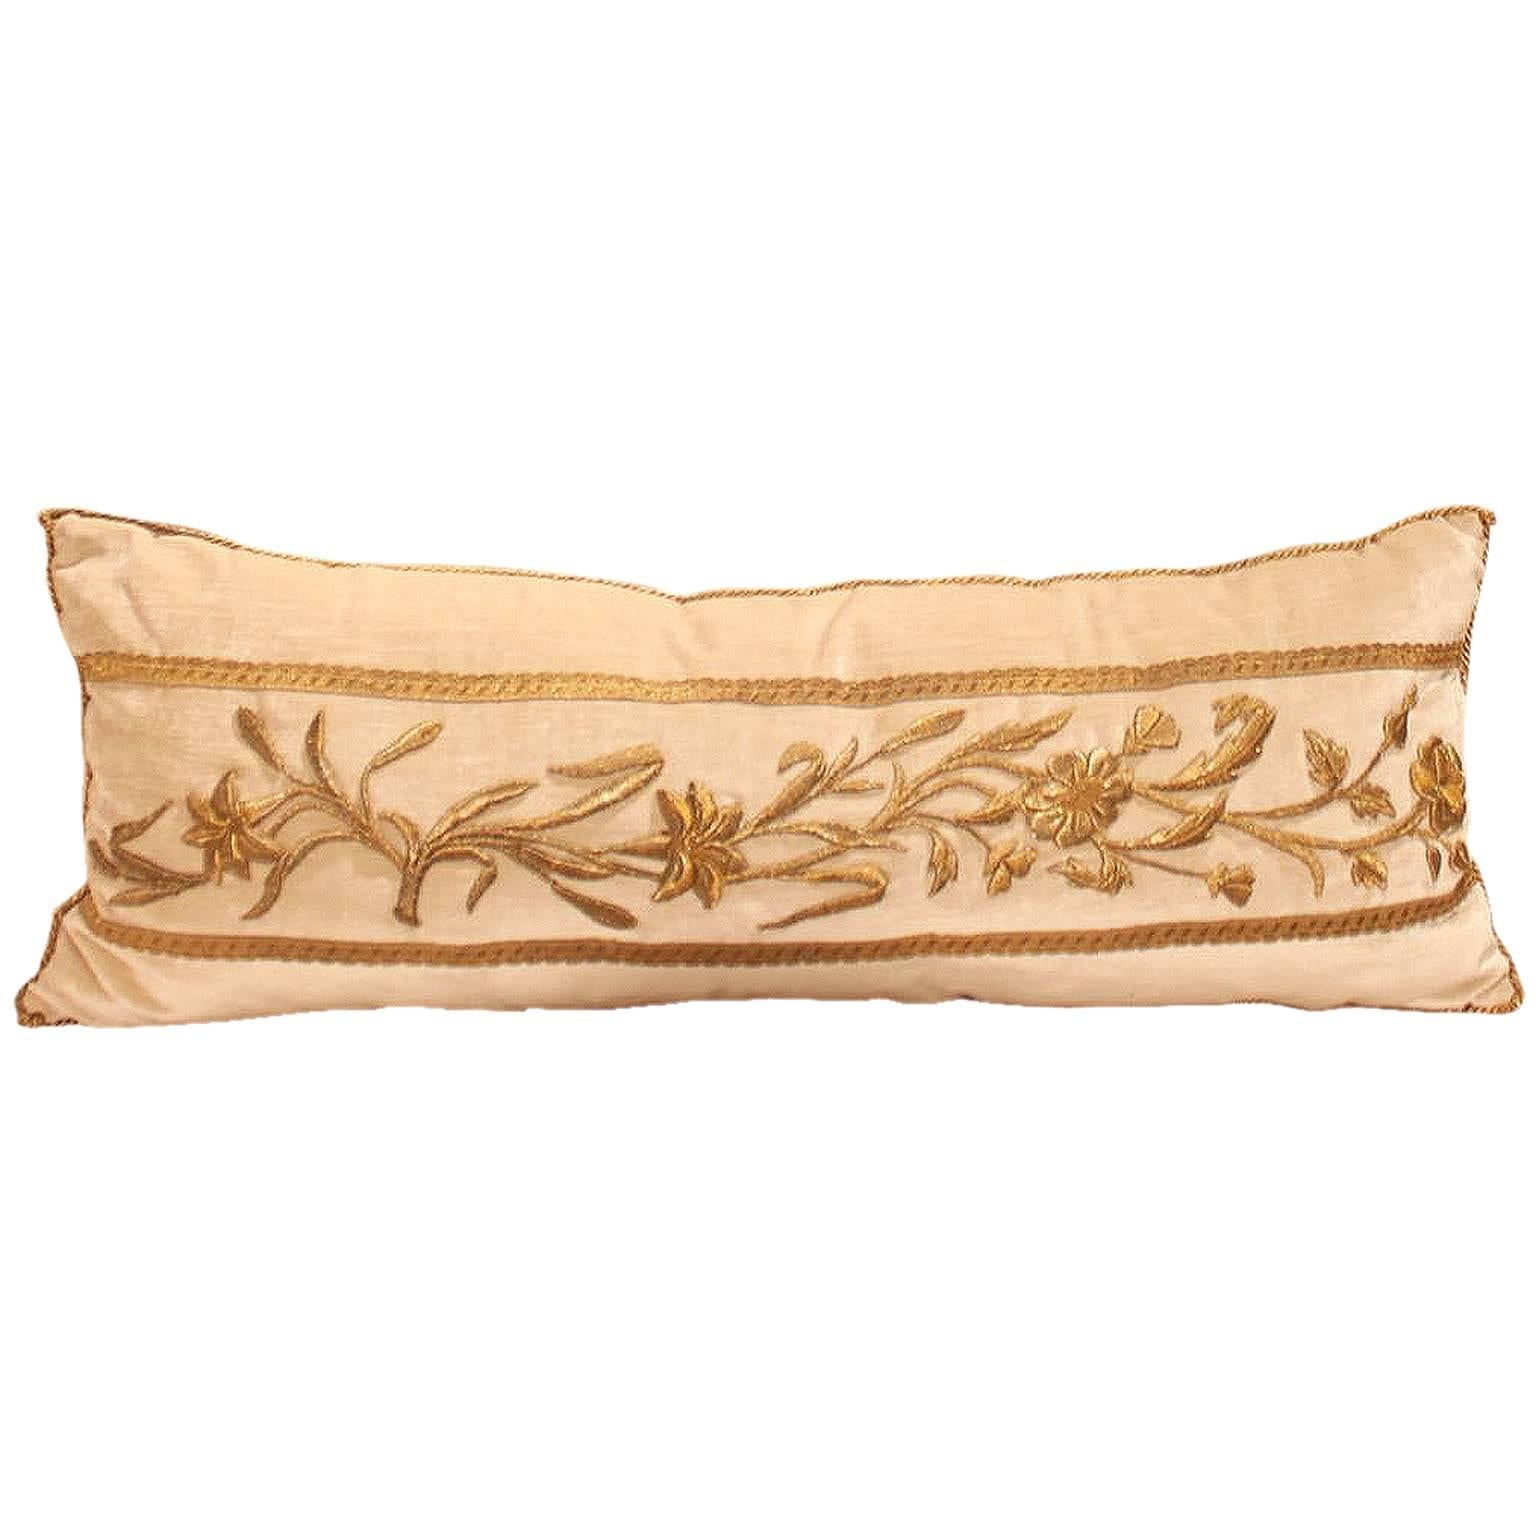 Antique European Gold Metallic Embroidery on Oyster Velvet Pillow